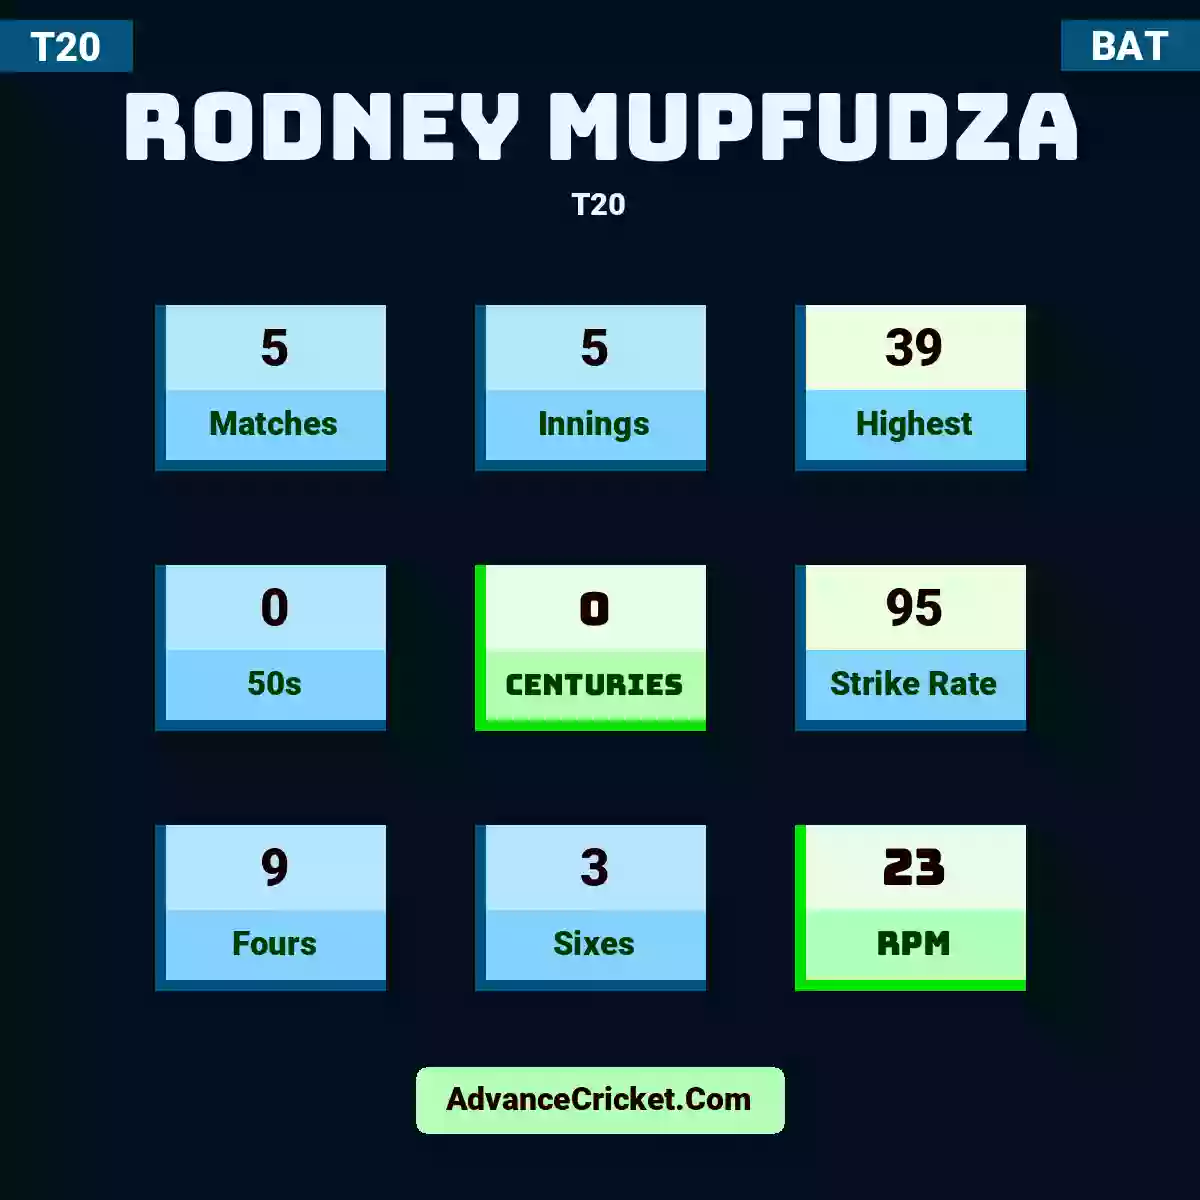 Rodney Mupfudza T20 , Rodney Mupfudza played 5 matches, scored 39 runs as highest, 0 half-centuries, and 0 centuries, with a strike rate of 95. R.Mupfudza hit 9 fours and 3 sixes, with an RPM of 23.